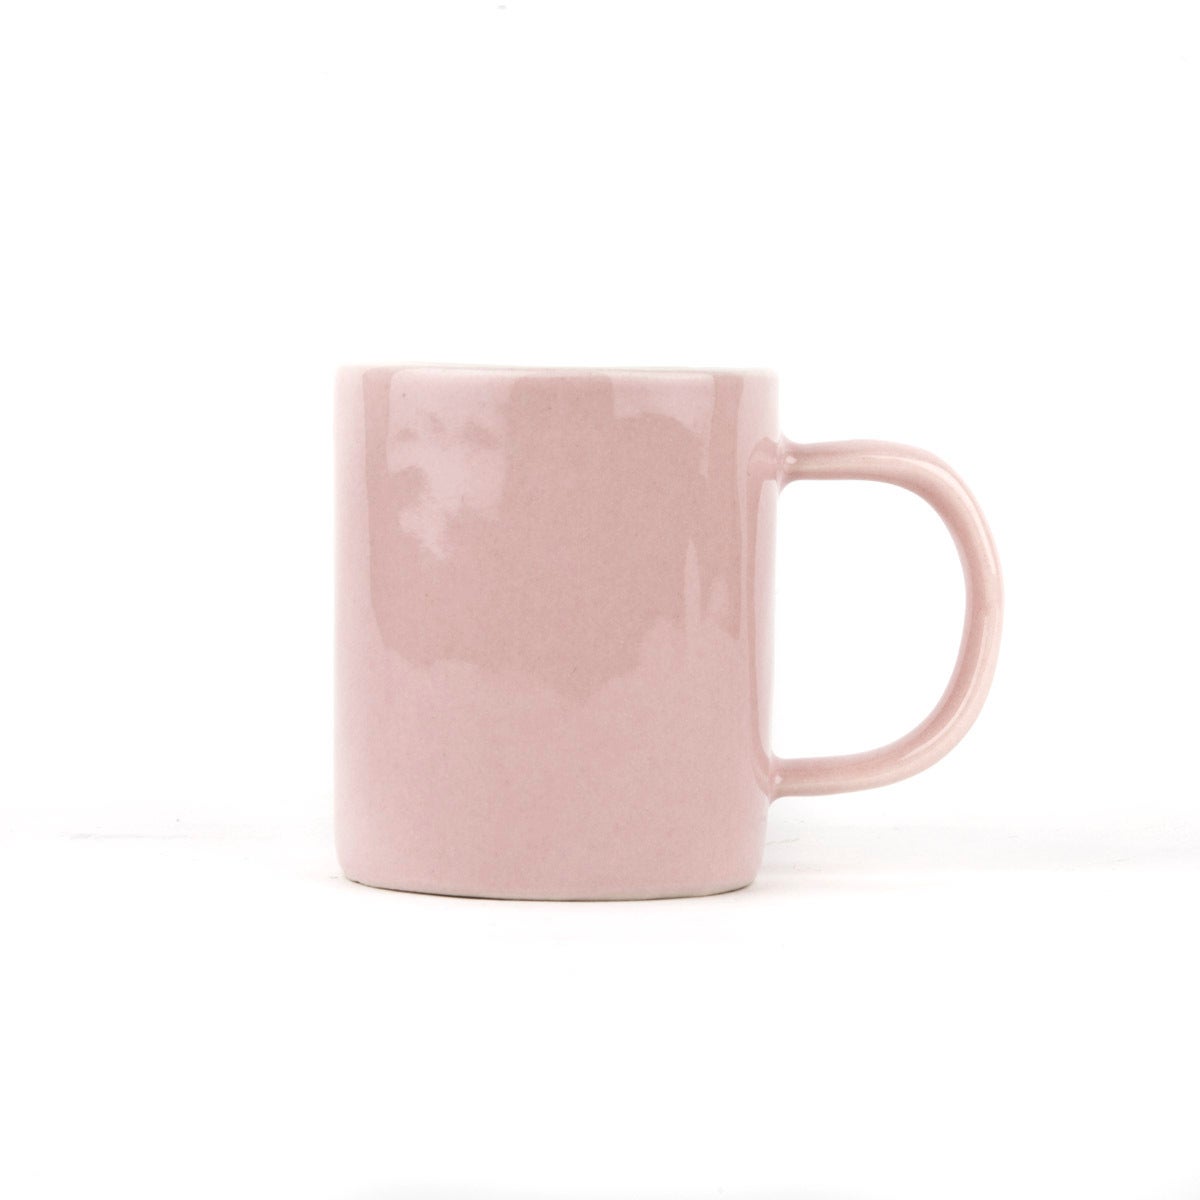 Quails Egg Ceramics Pale Pink Ceramics Espresso Cup